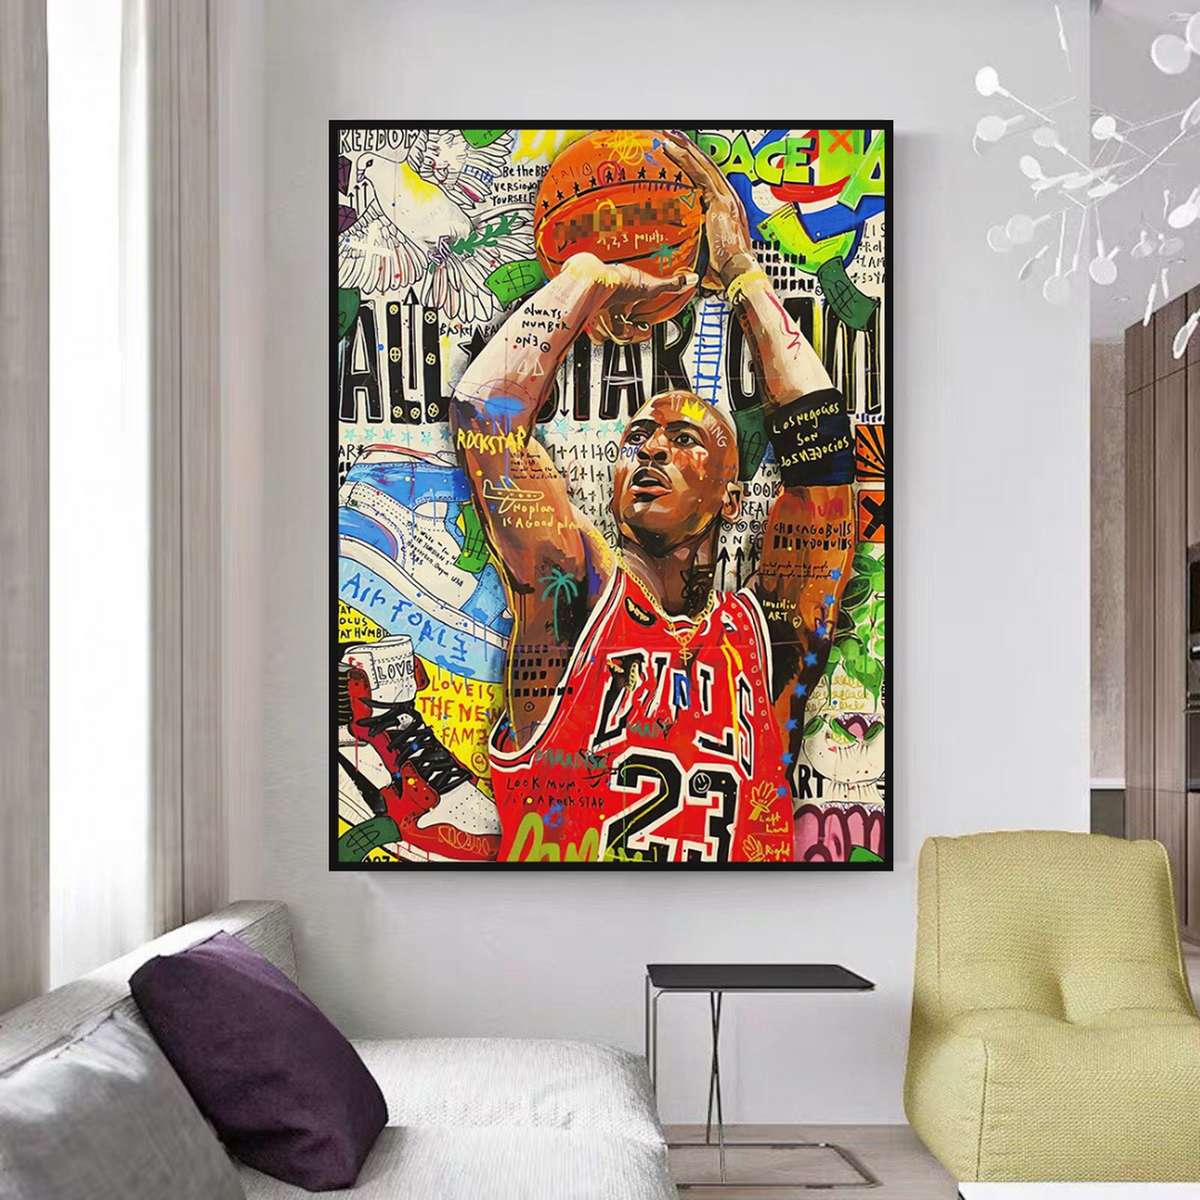 NBA All Star Jordan Art: A Must-Have for Fans